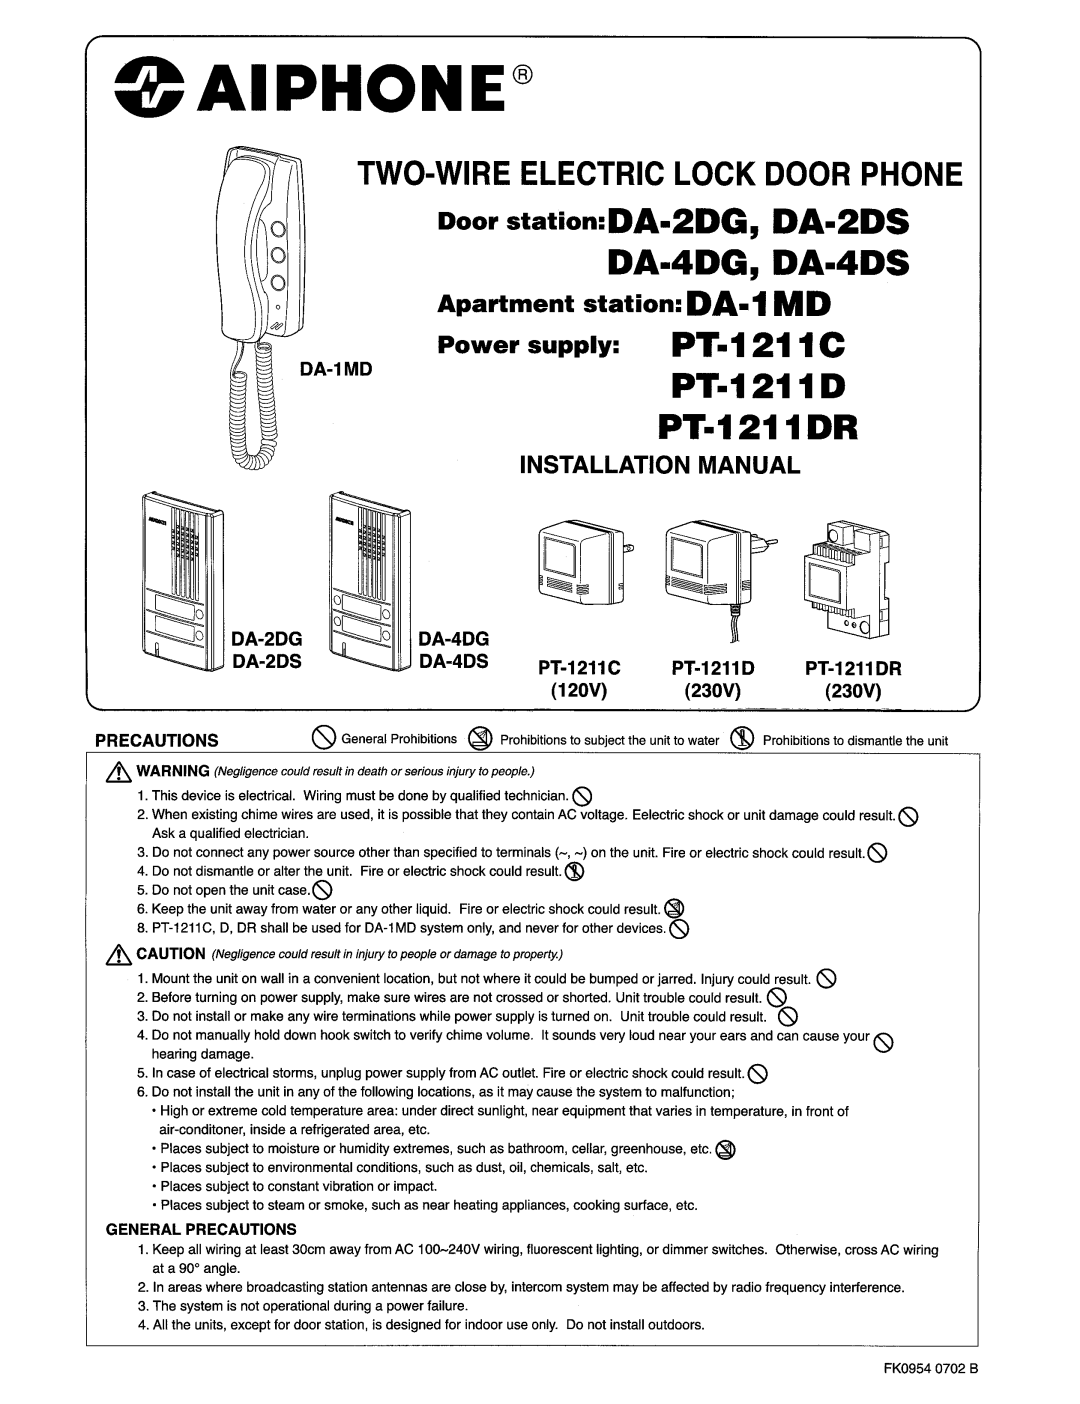 Aiphone DA-4DG, DA-4DS, DA-2DS, PT-1211C, PT-1211DR manual 